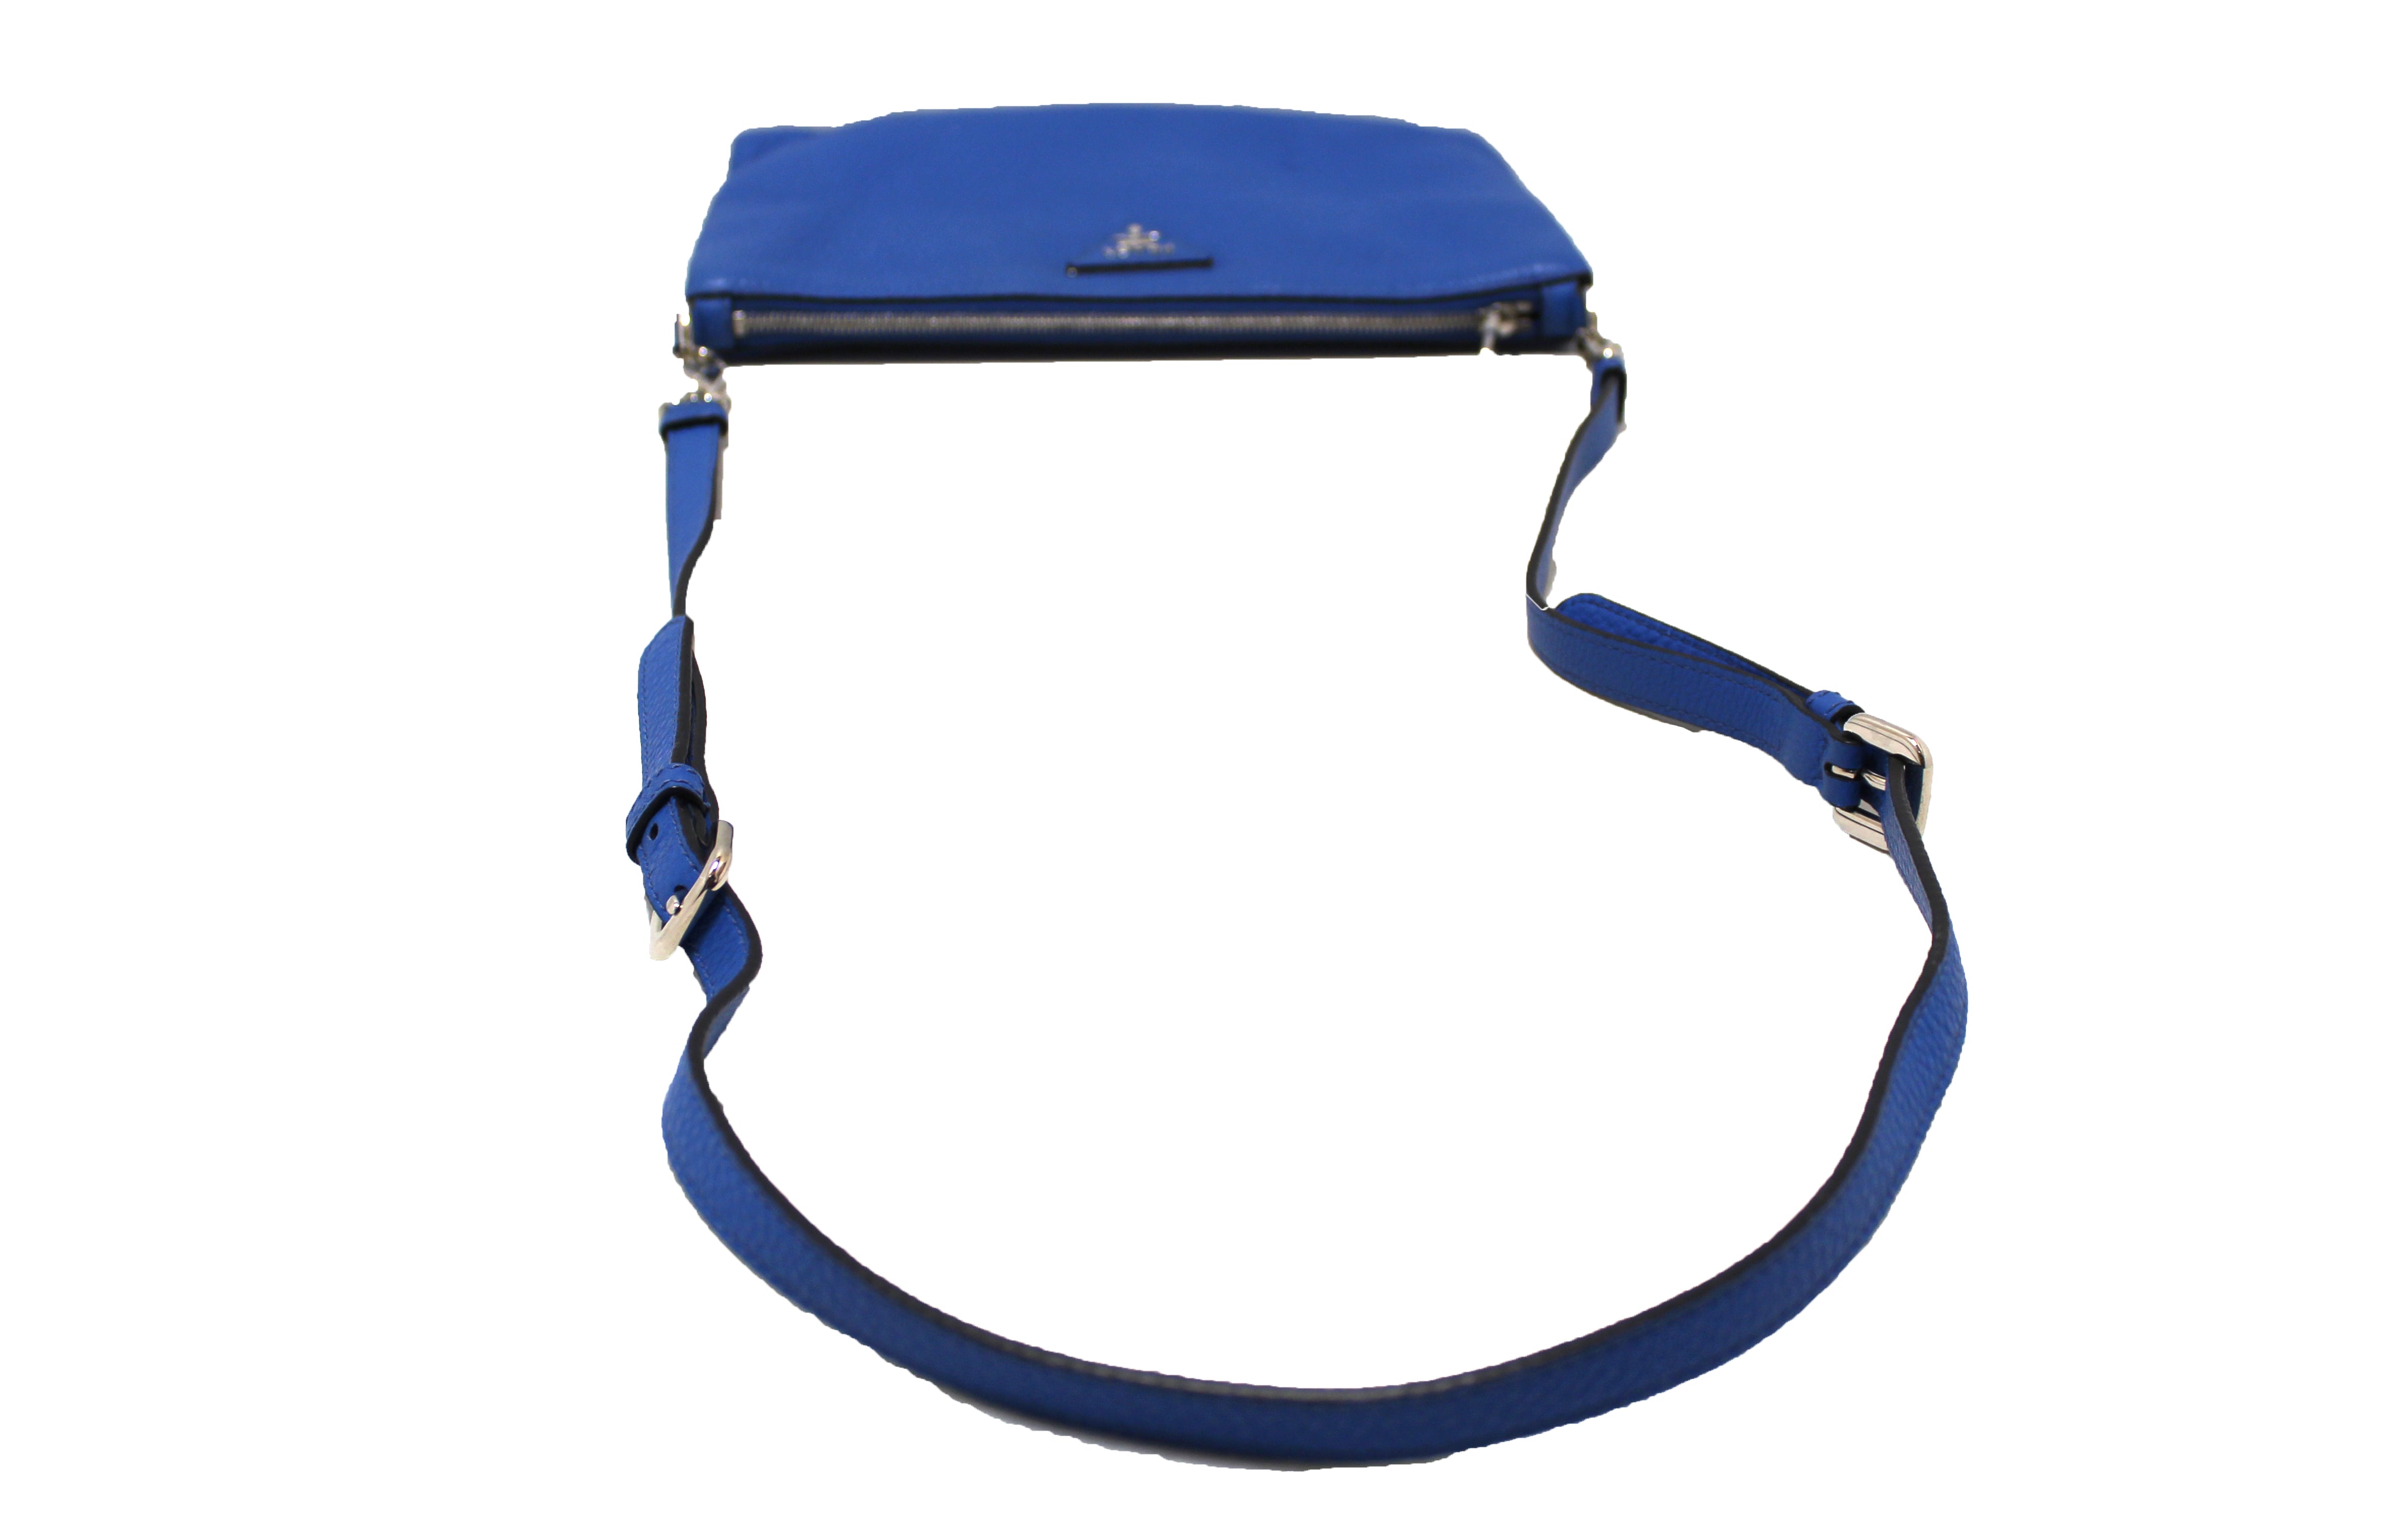 Authentic Prada Blue Calfskin Leather Messenger Bag – Paris Station Shop